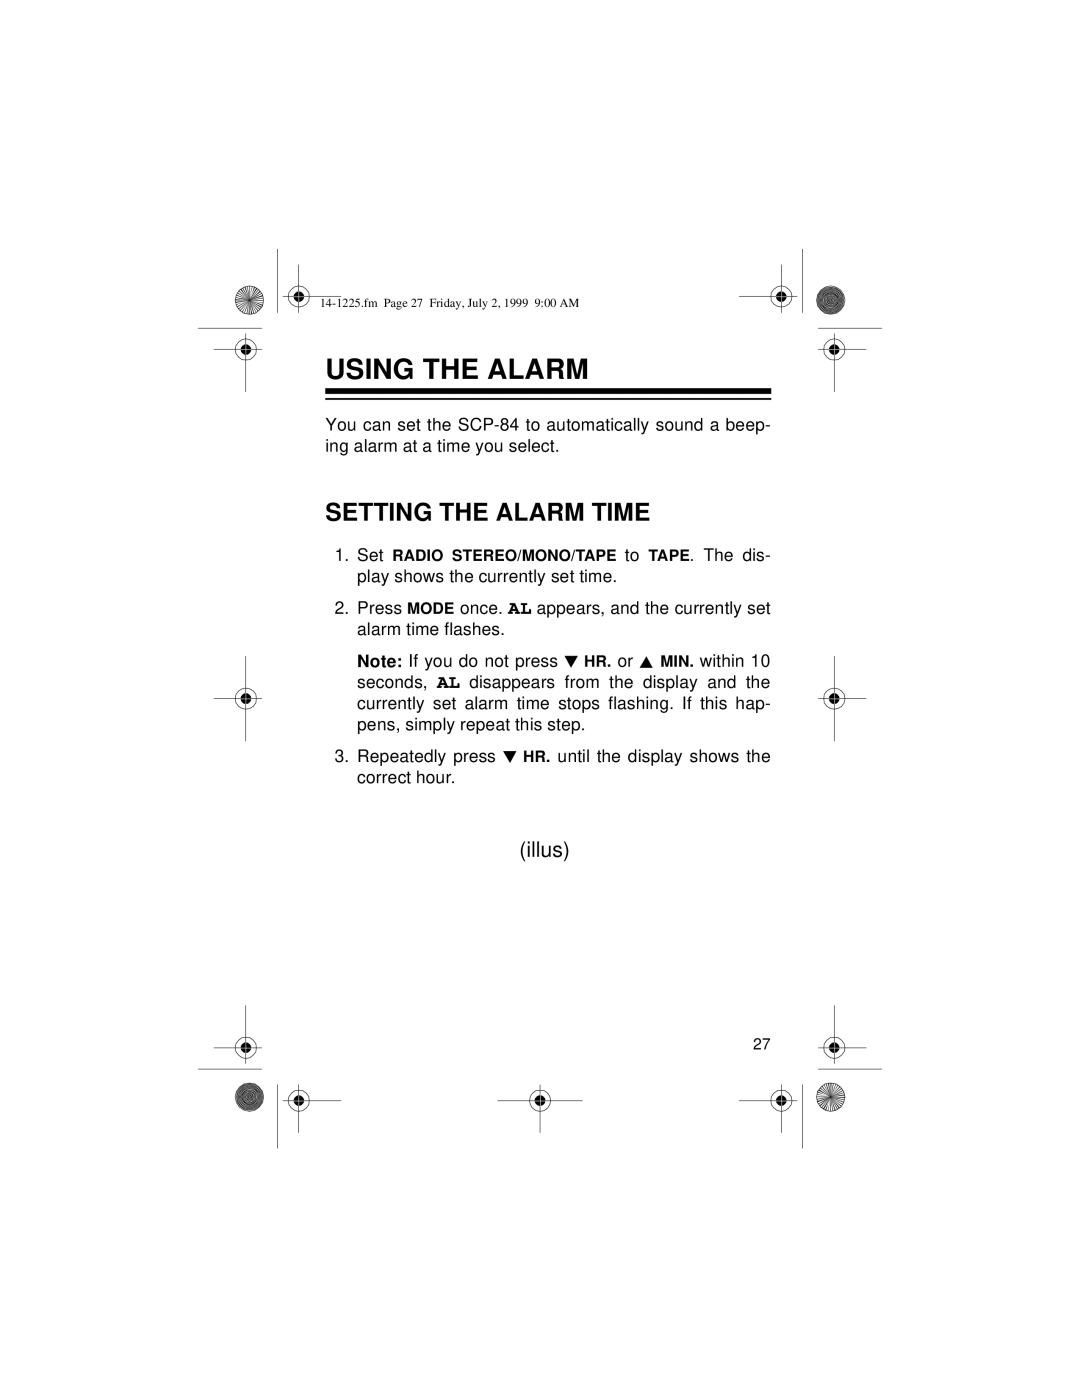 Optimus SCP-84 owner manual Using The Alarm, Setting The Alarm Time, illus 